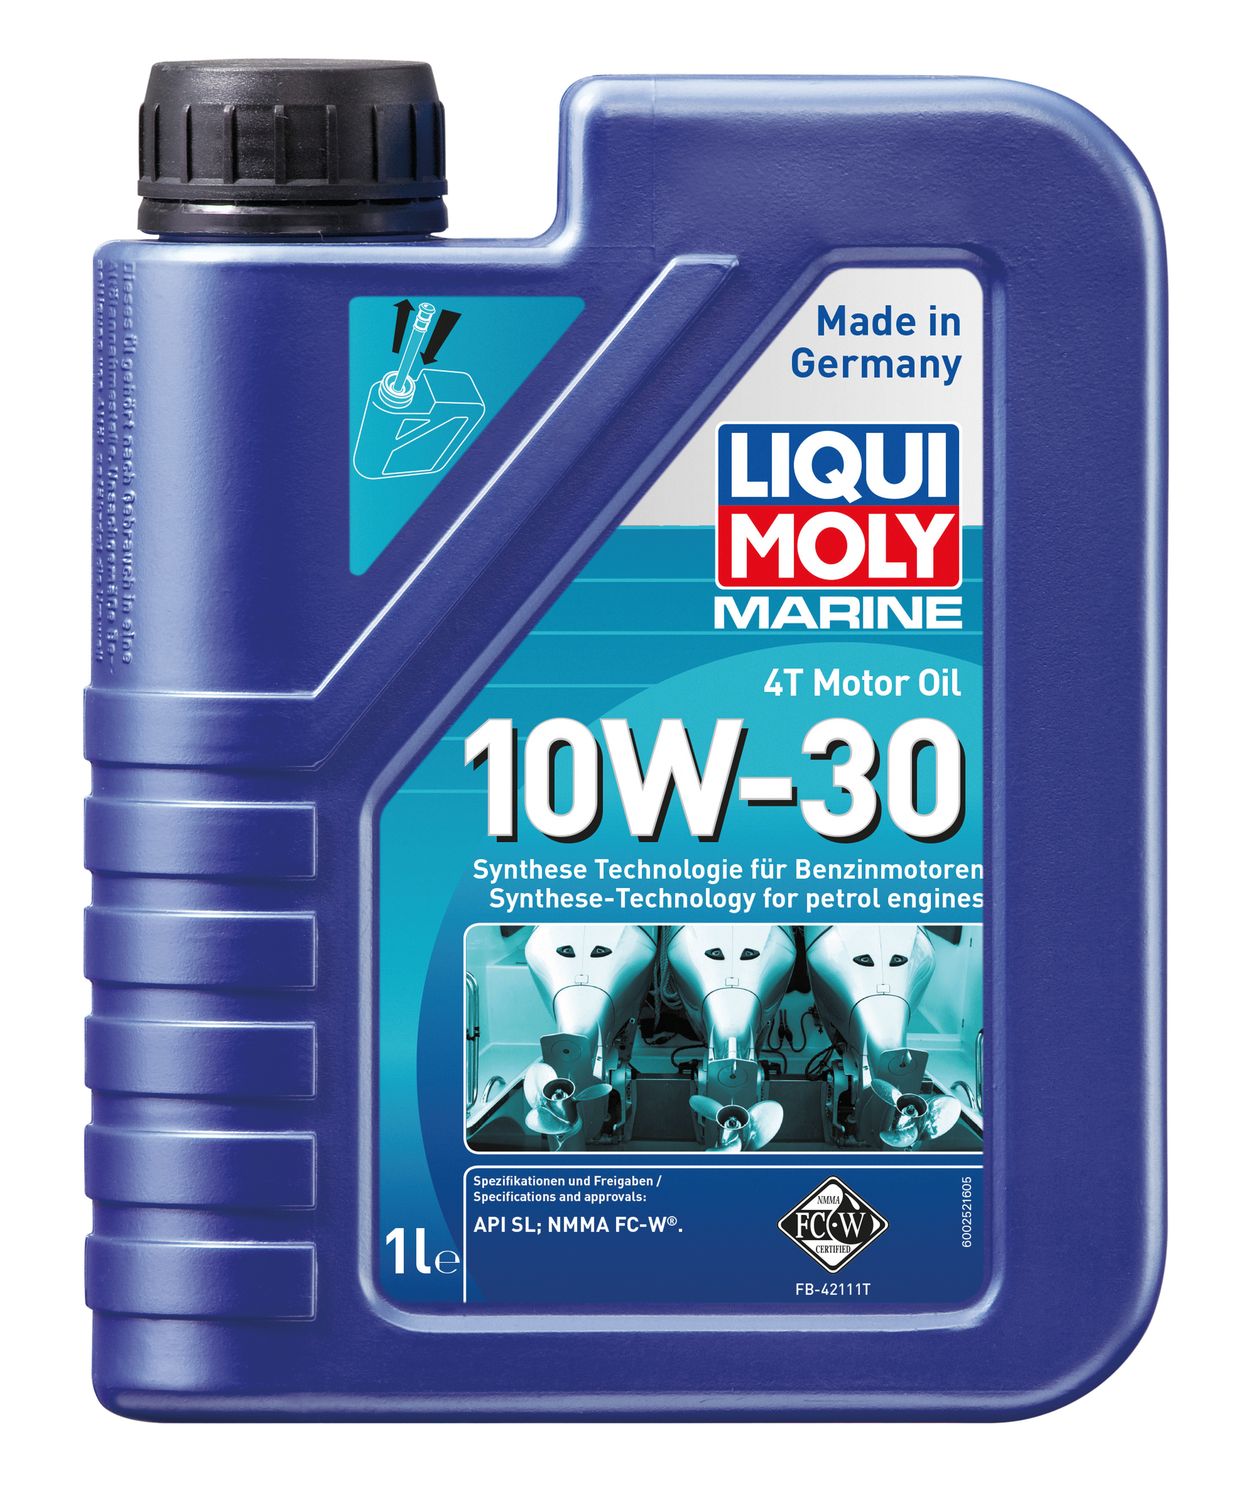 LIQUI MOLY Marine 4T Motor Oil 10W 30